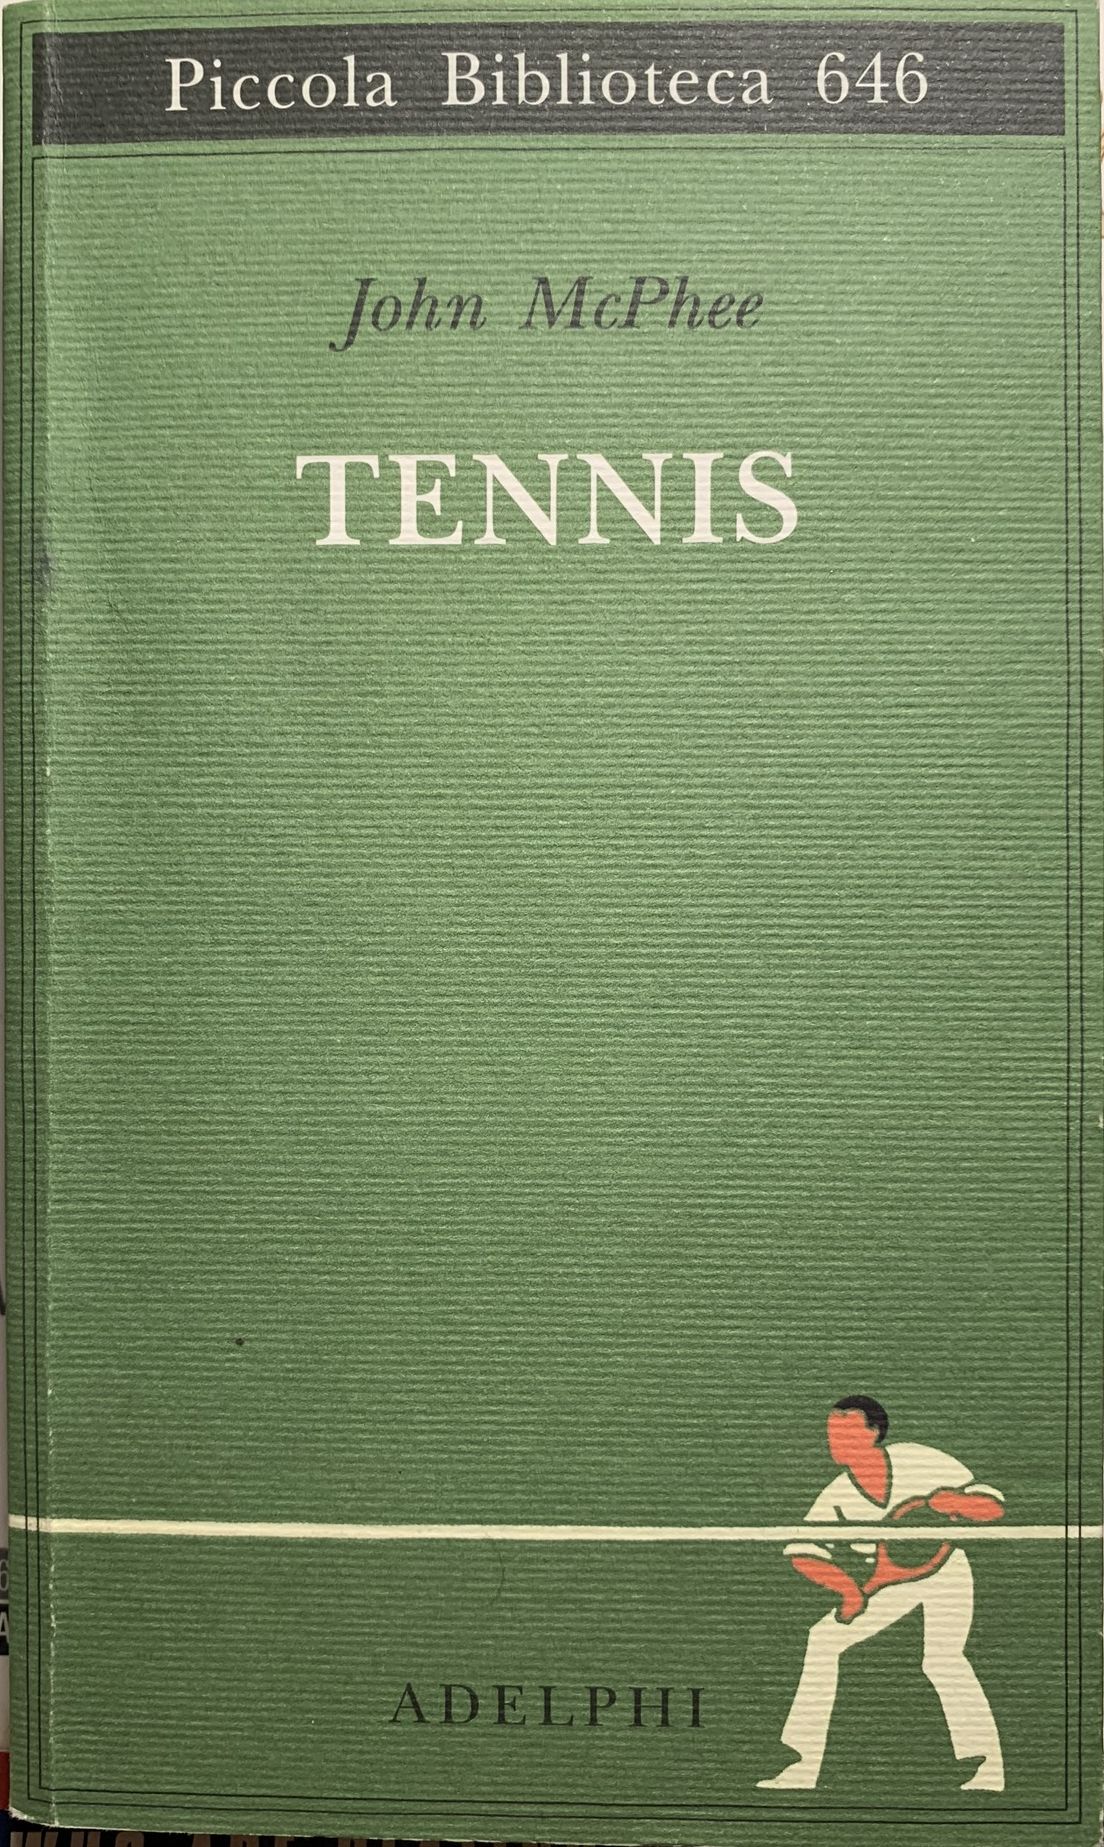 Tennis di John McPhee (trad. Matteo Codignola)  - Ed. Adelphi 2013